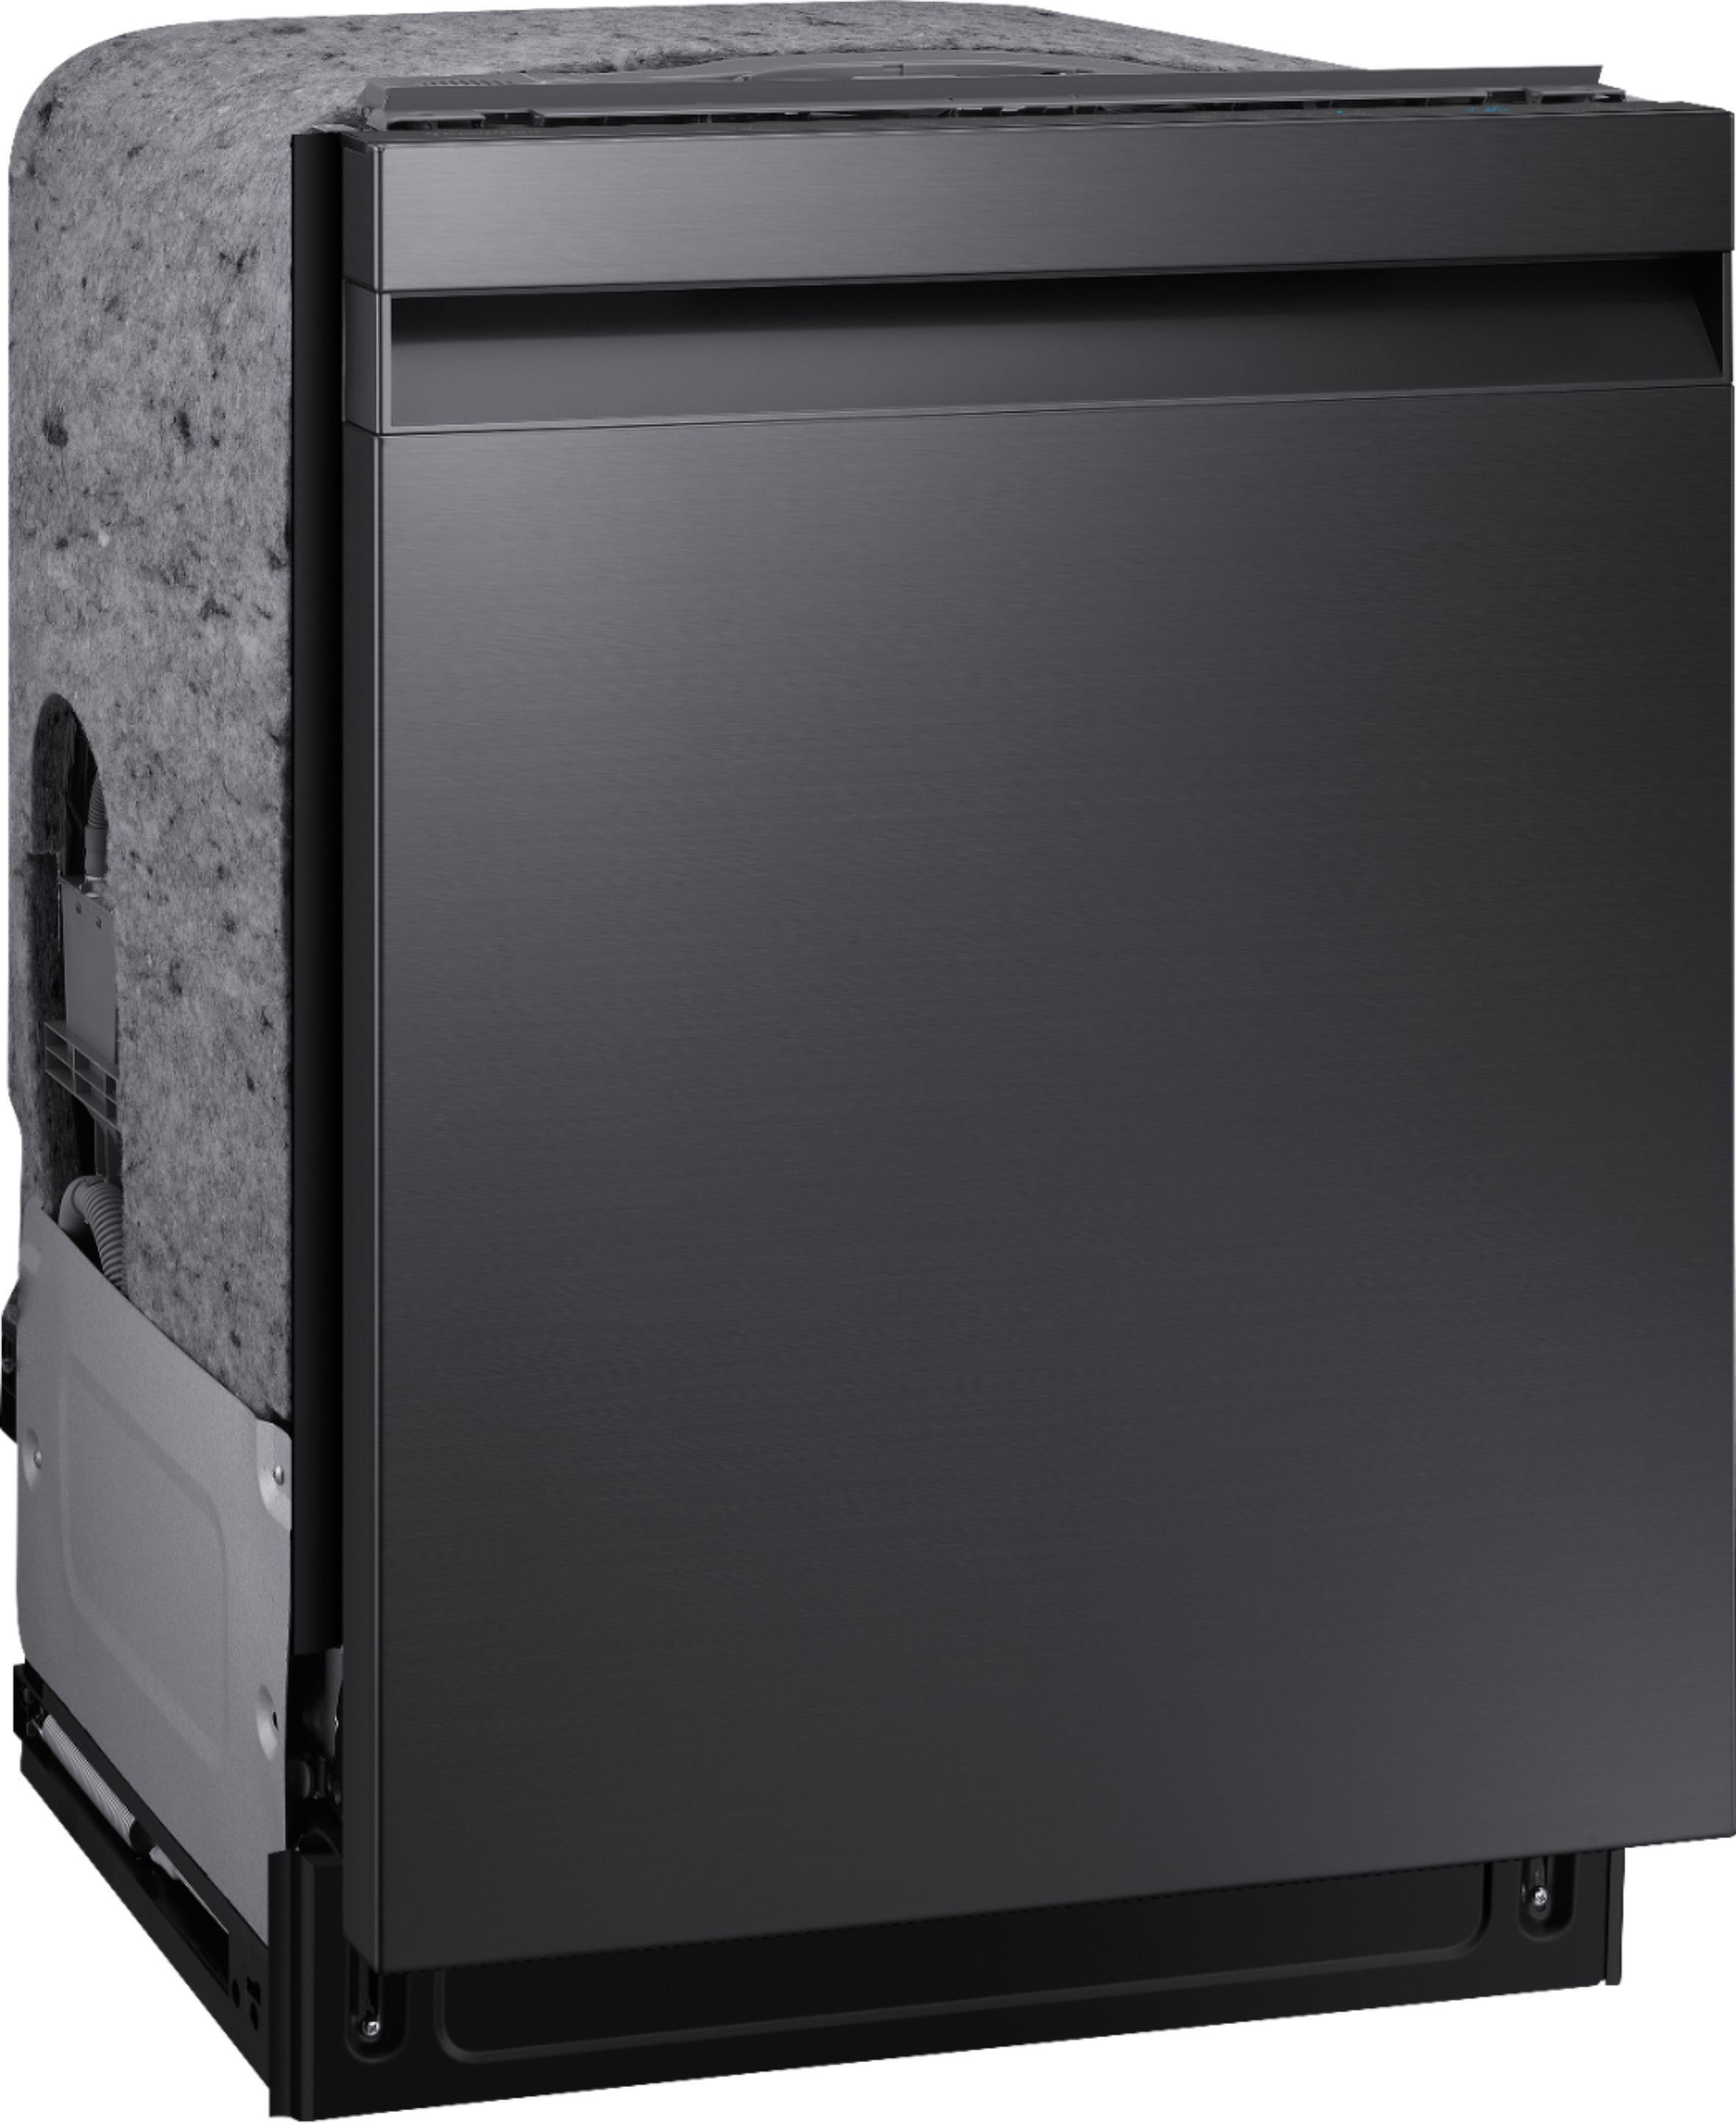 DW80R7060US by Samsung - StormWash™ 42 dBA Dishwasher in Stainless Steel